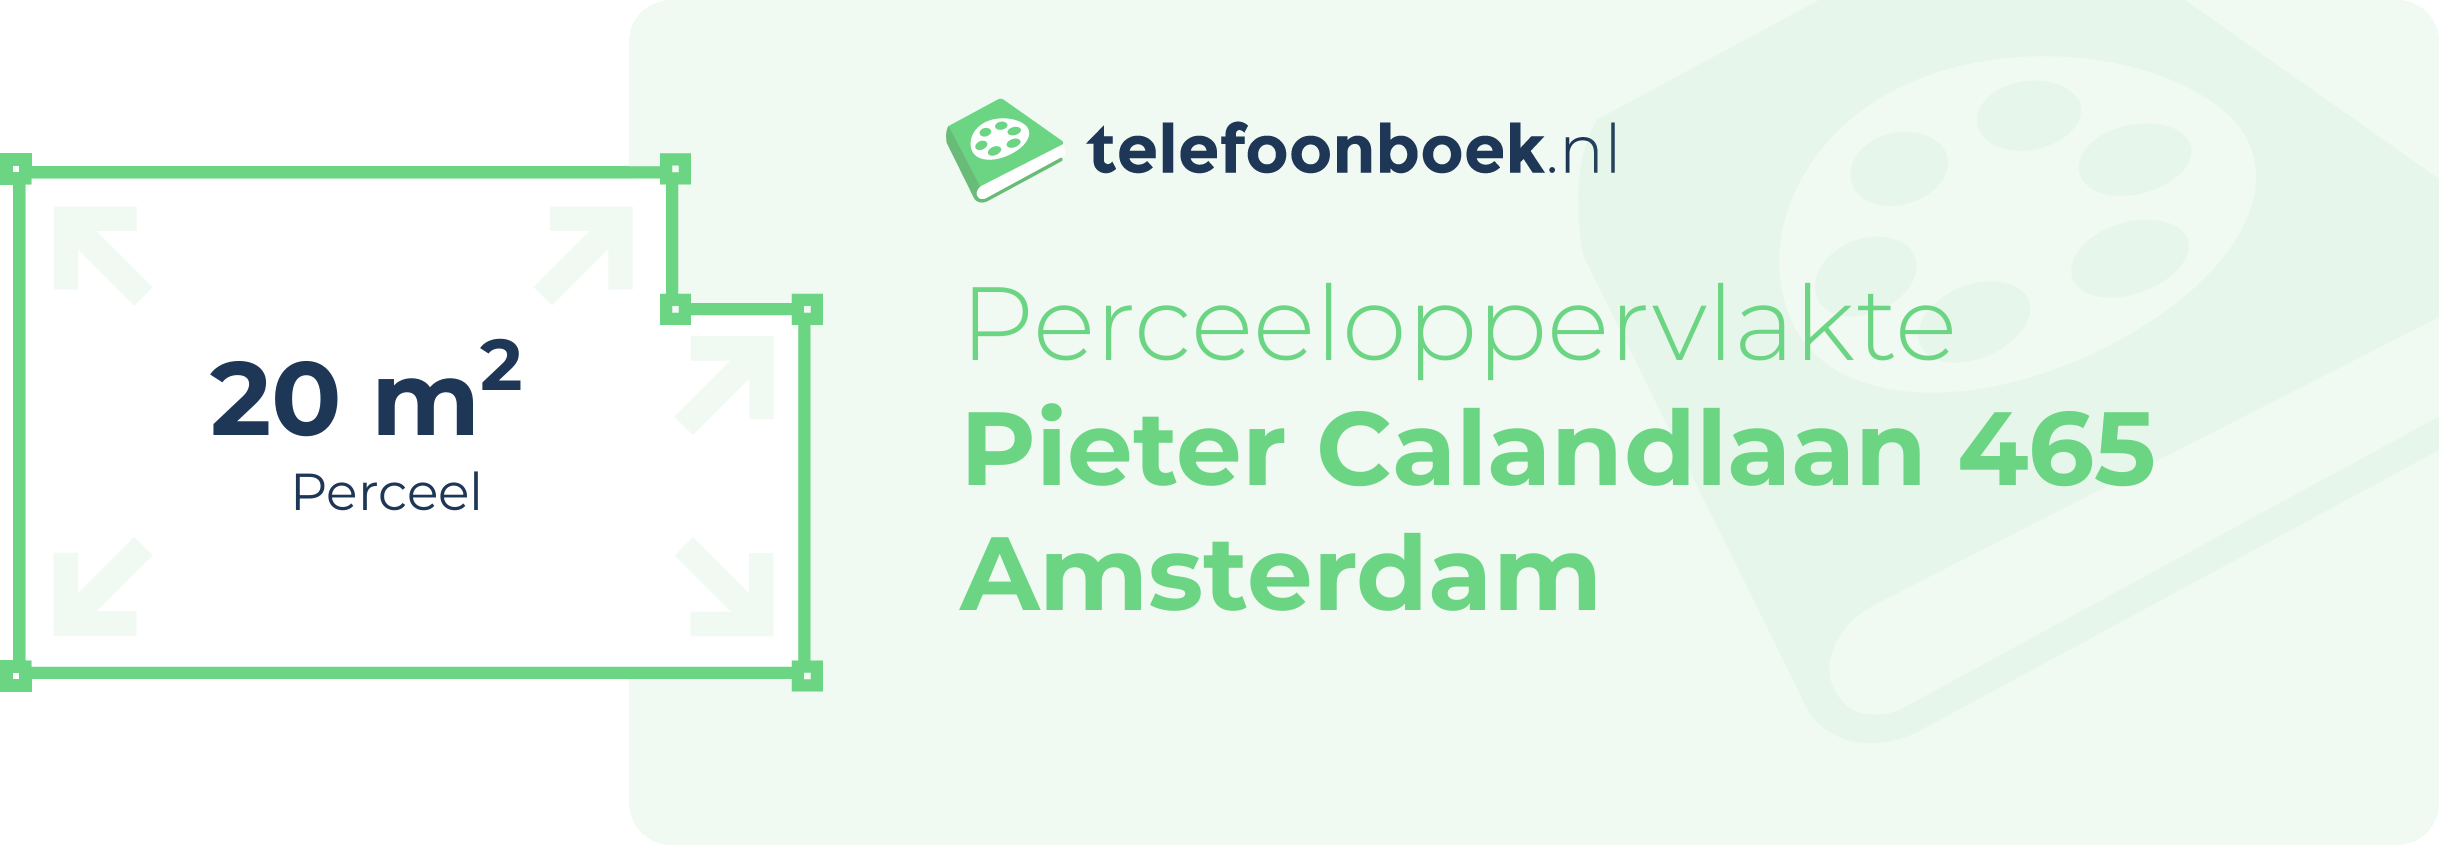 Perceeloppervlakte Pieter Calandlaan 465 Amsterdam